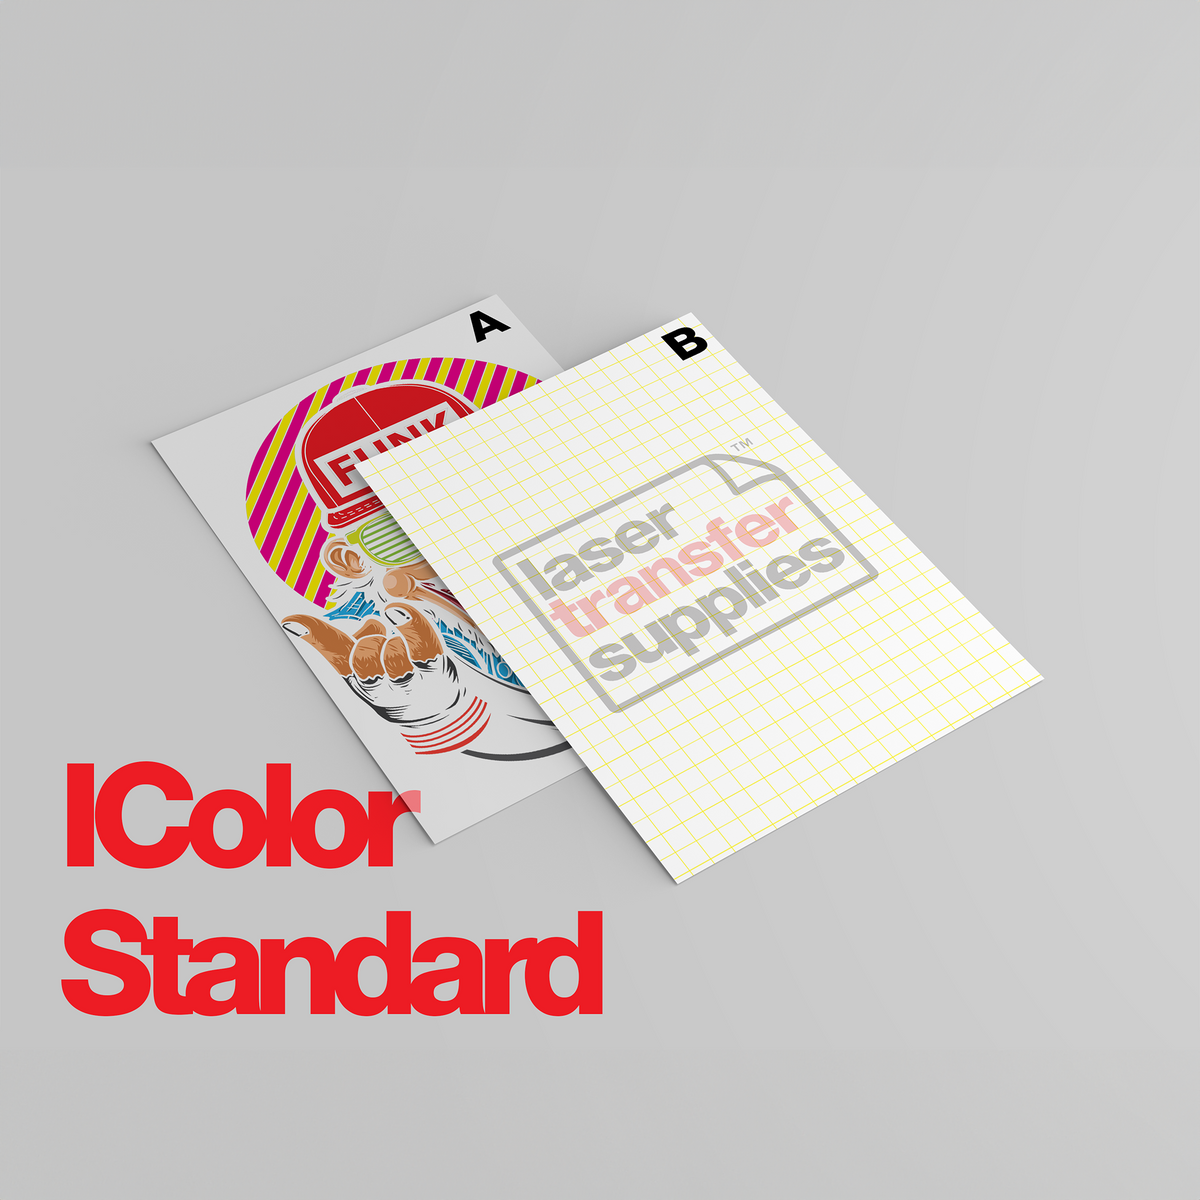 IColor Standard